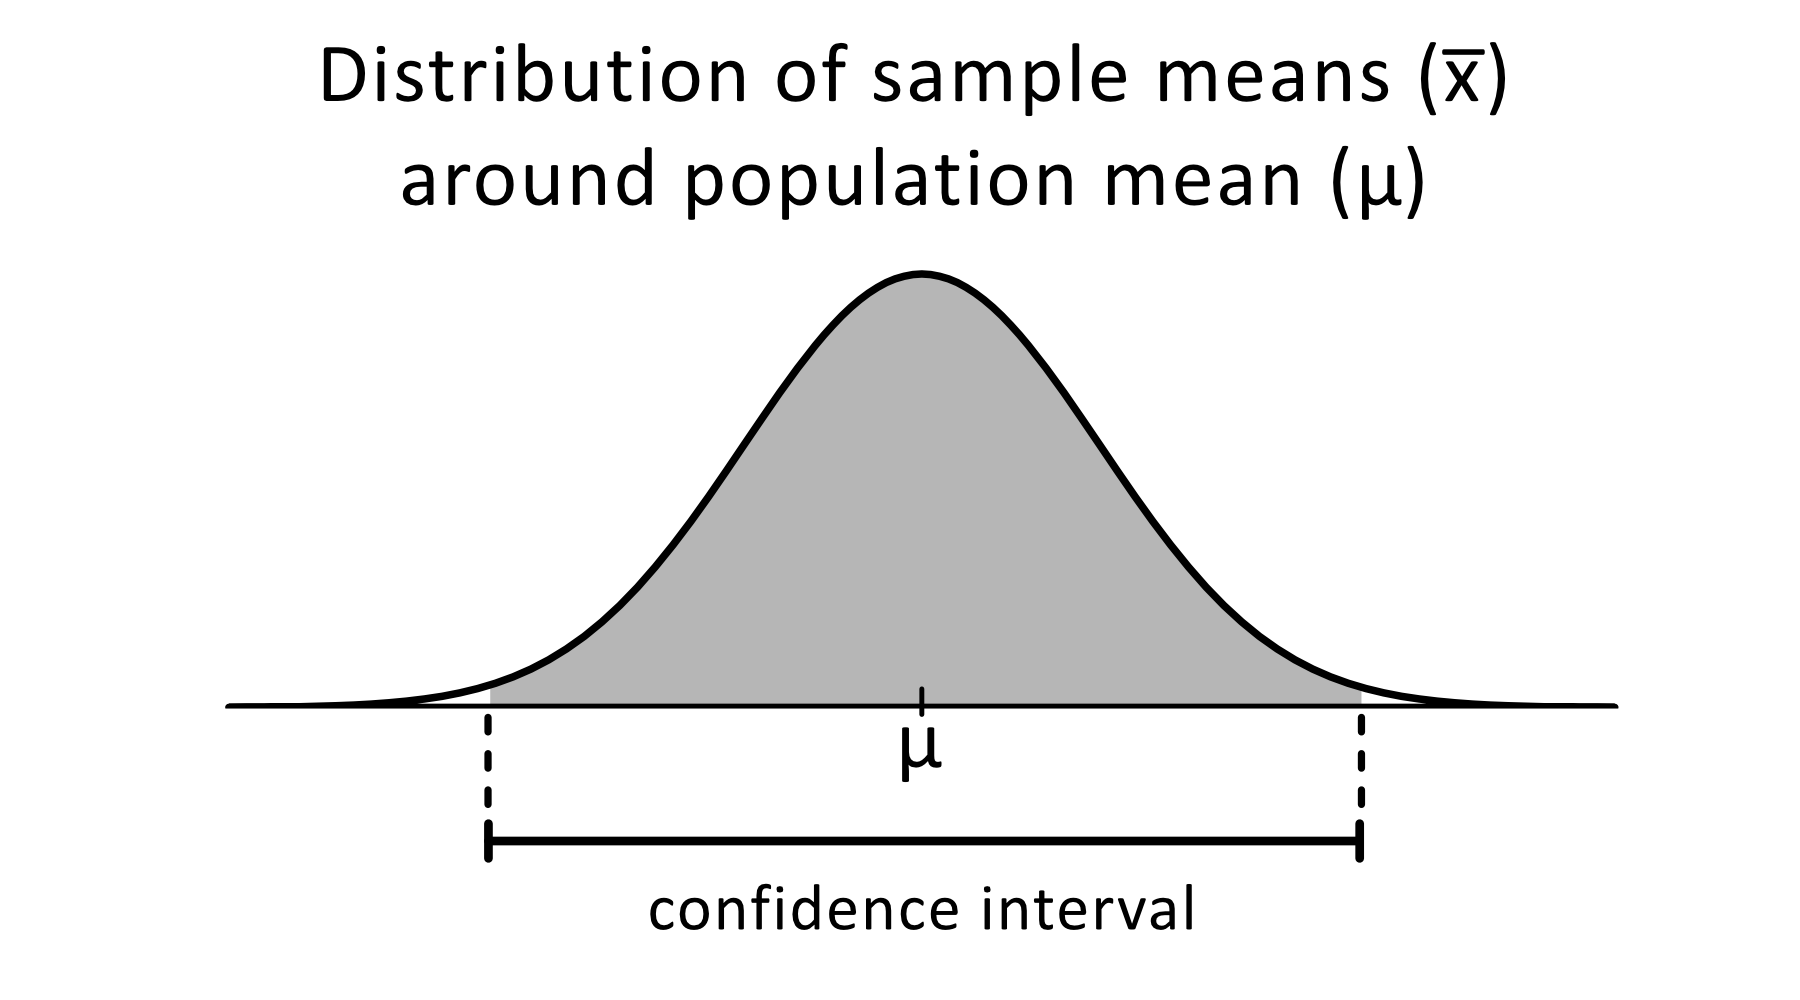 confidence interval figure